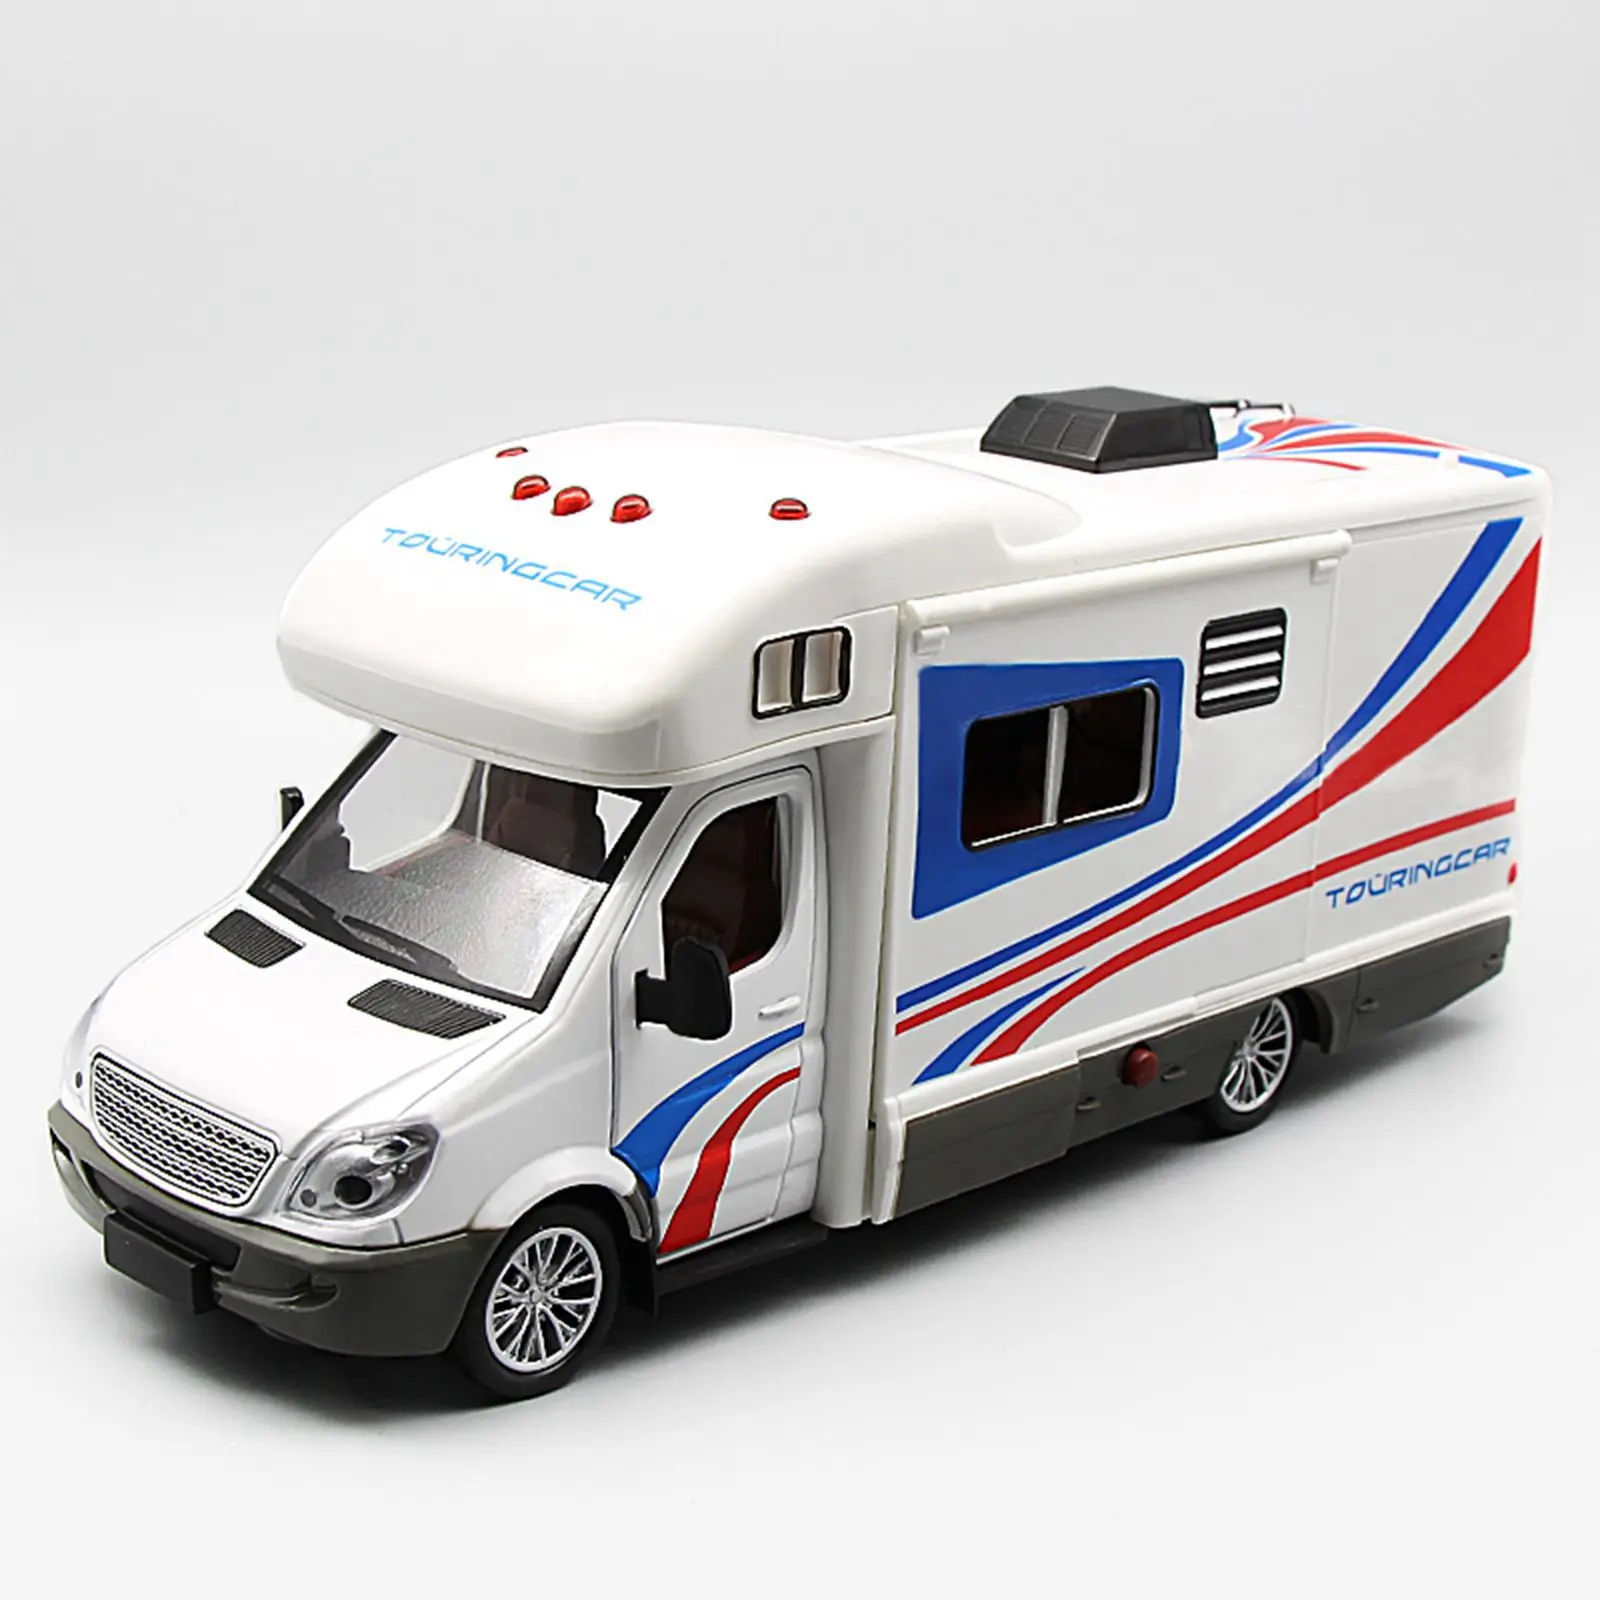 1:32 Maßstab Sprinter Luxus Wohnmobil Wohnmobil RV Trailer Diecast Car Model Toy 